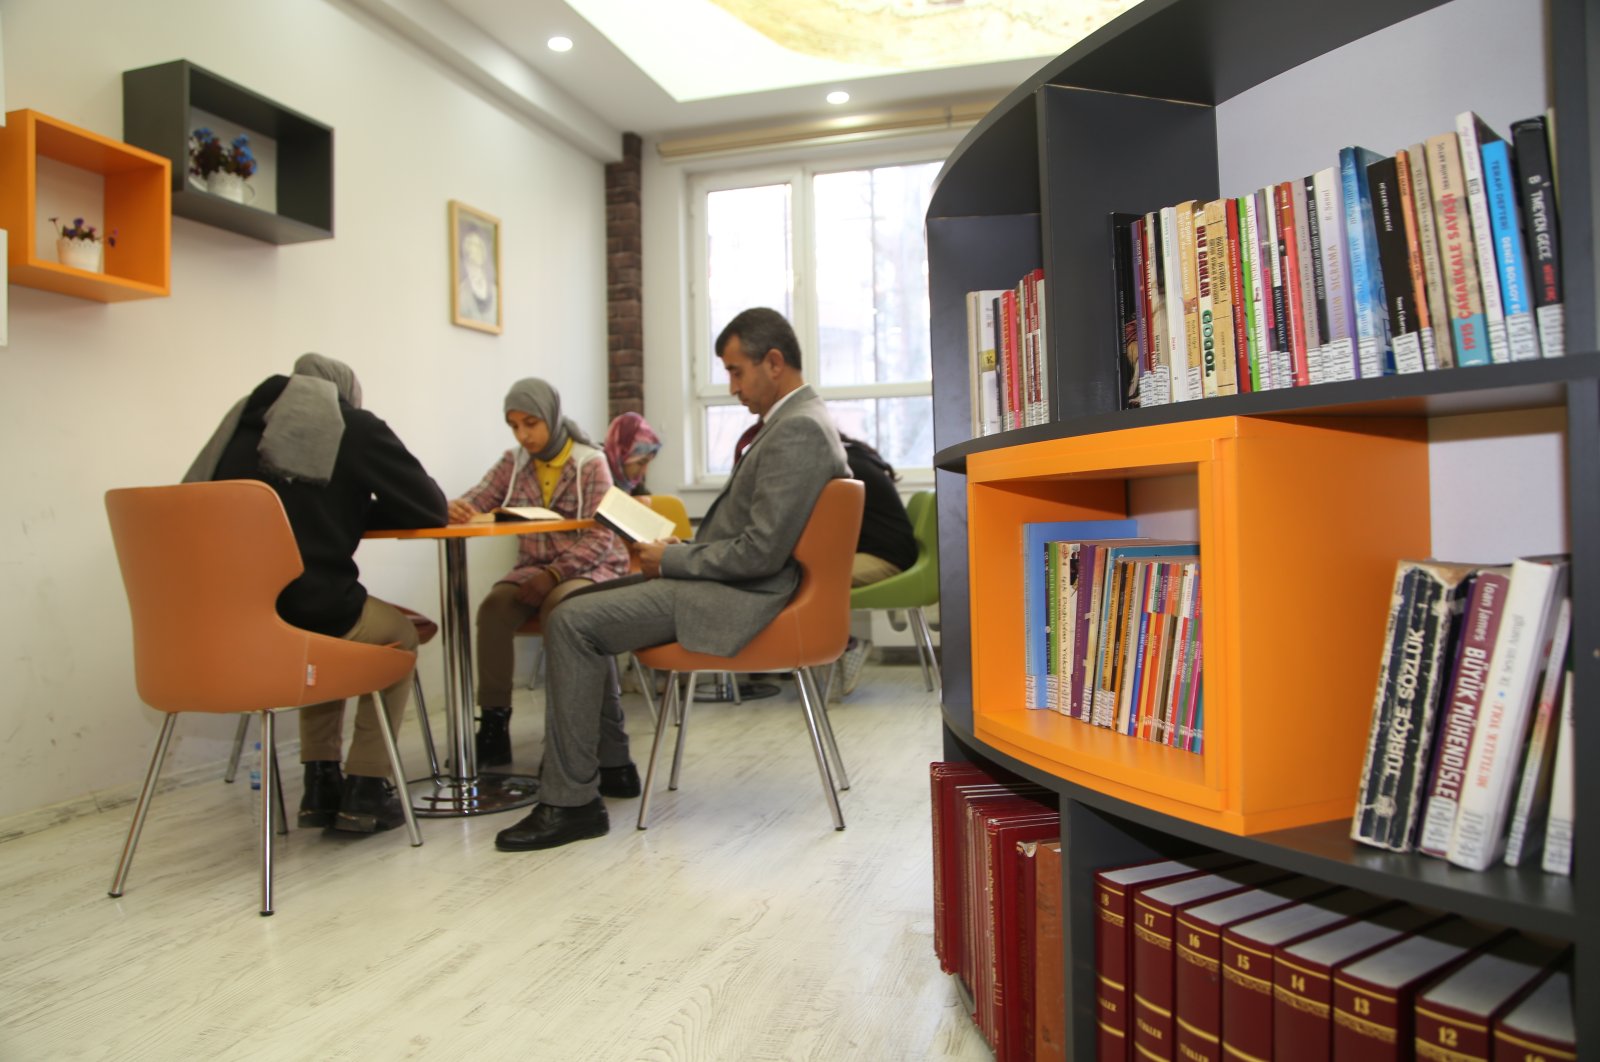 In Şanlıurfa, 974 new libraries have been inaugurated in schools as part of the "No Schools Without Libraries" project, Şanlıurfa, Türkiye, Jan. 14, 2023. (AA Photo)